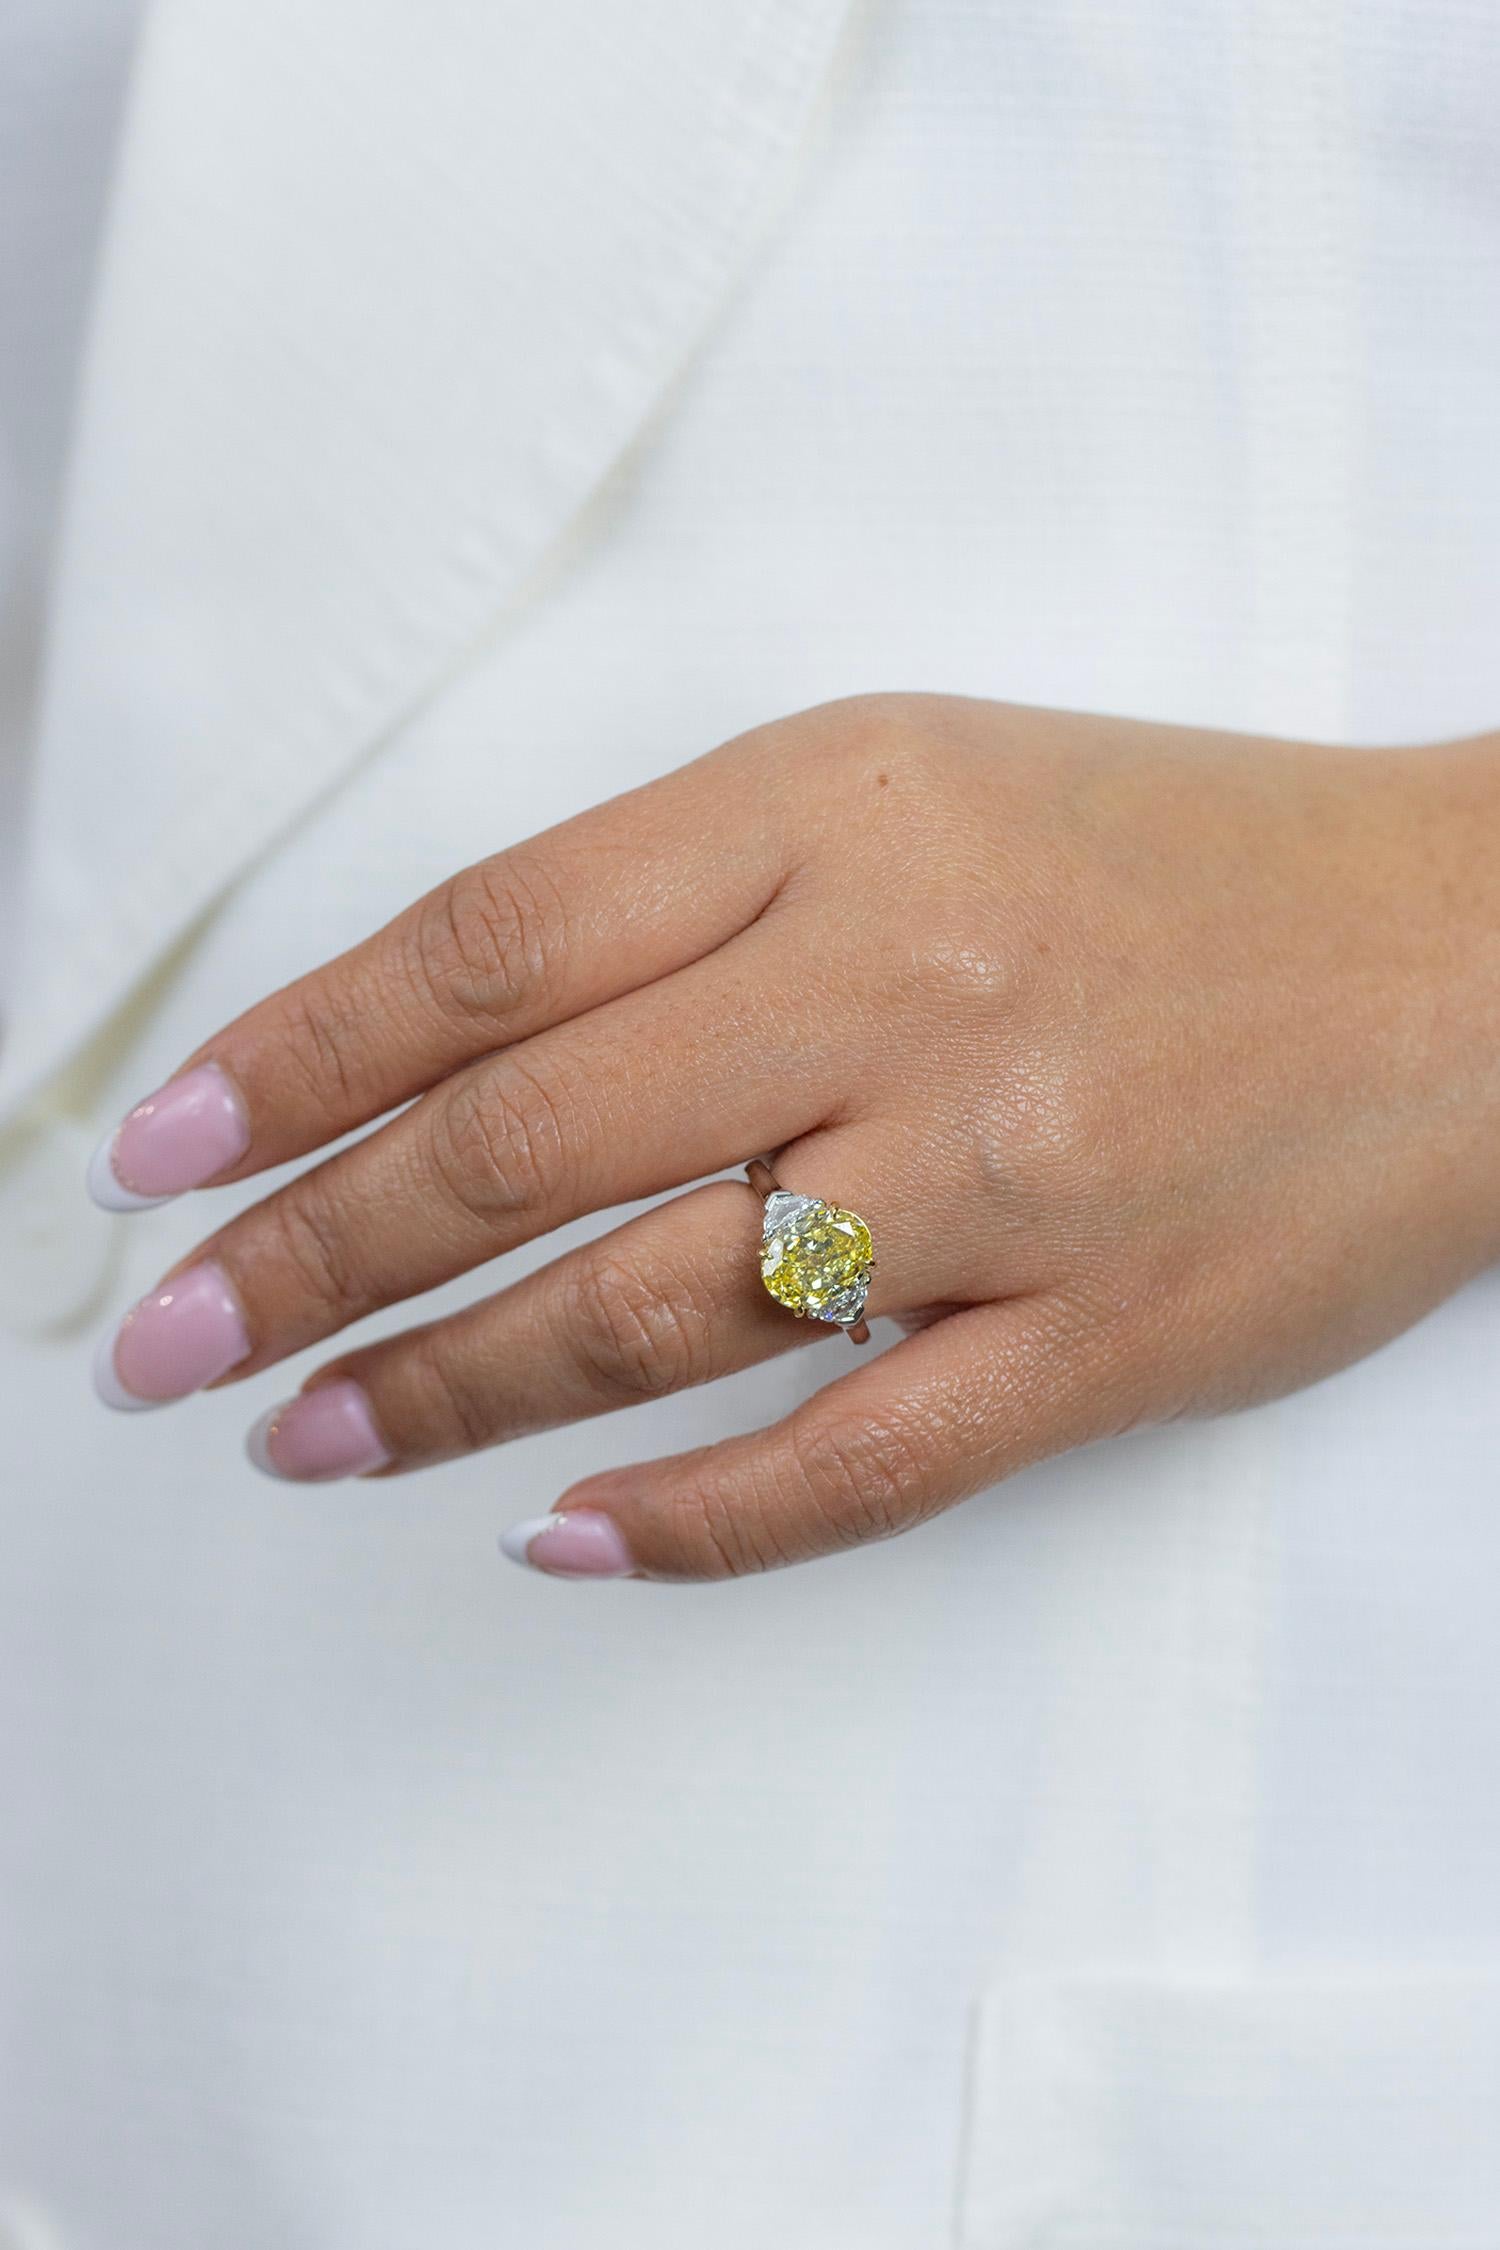 Women's GIA Certified 4.12 Carats Oval Cut Fancy Intense Yellow Diamond Ring For Sale